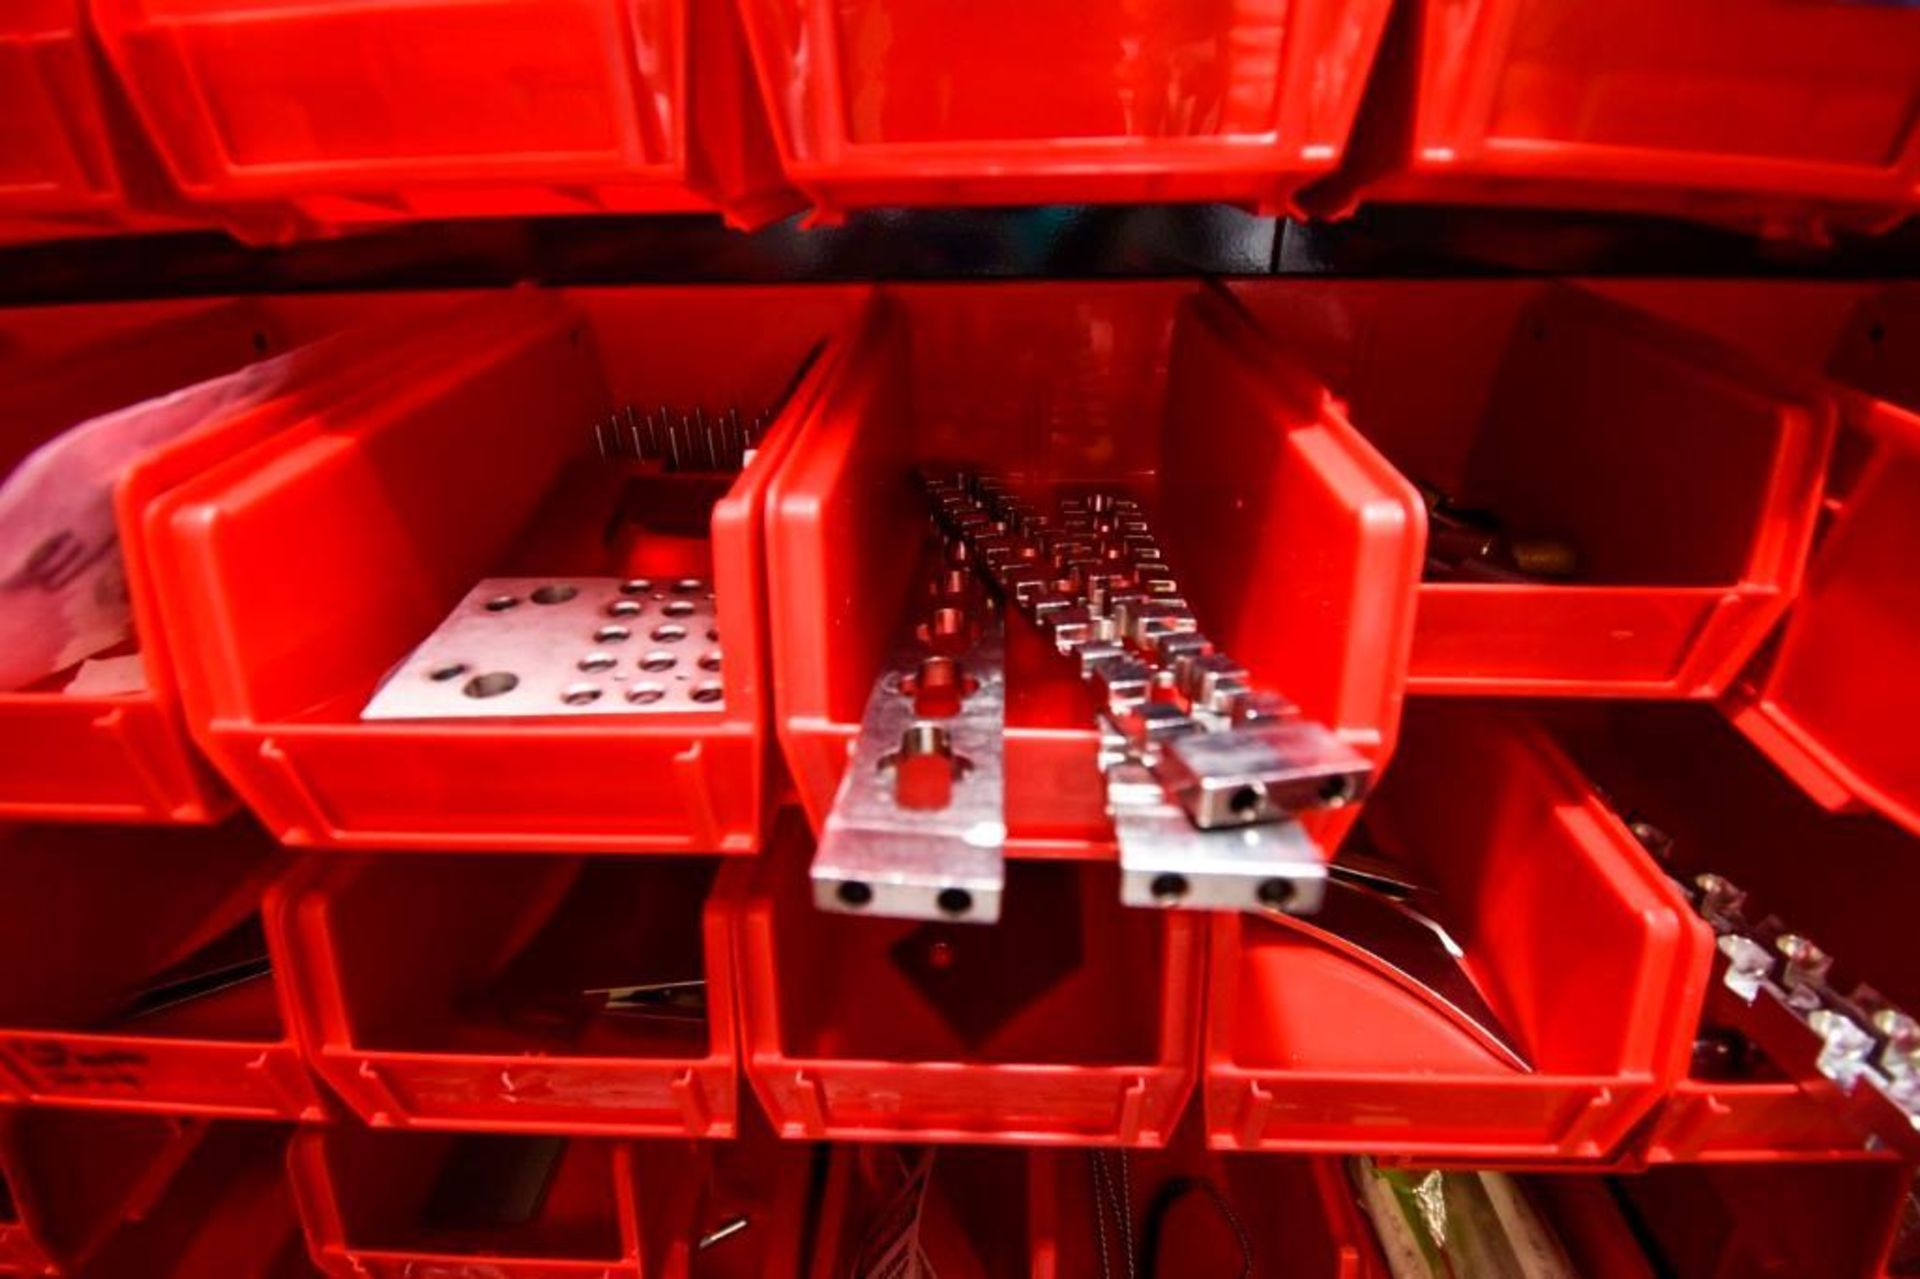 Qualicaps LIQFIL Super 40 Capsule Filling Machine and Spare Parts - Image 23 of 29